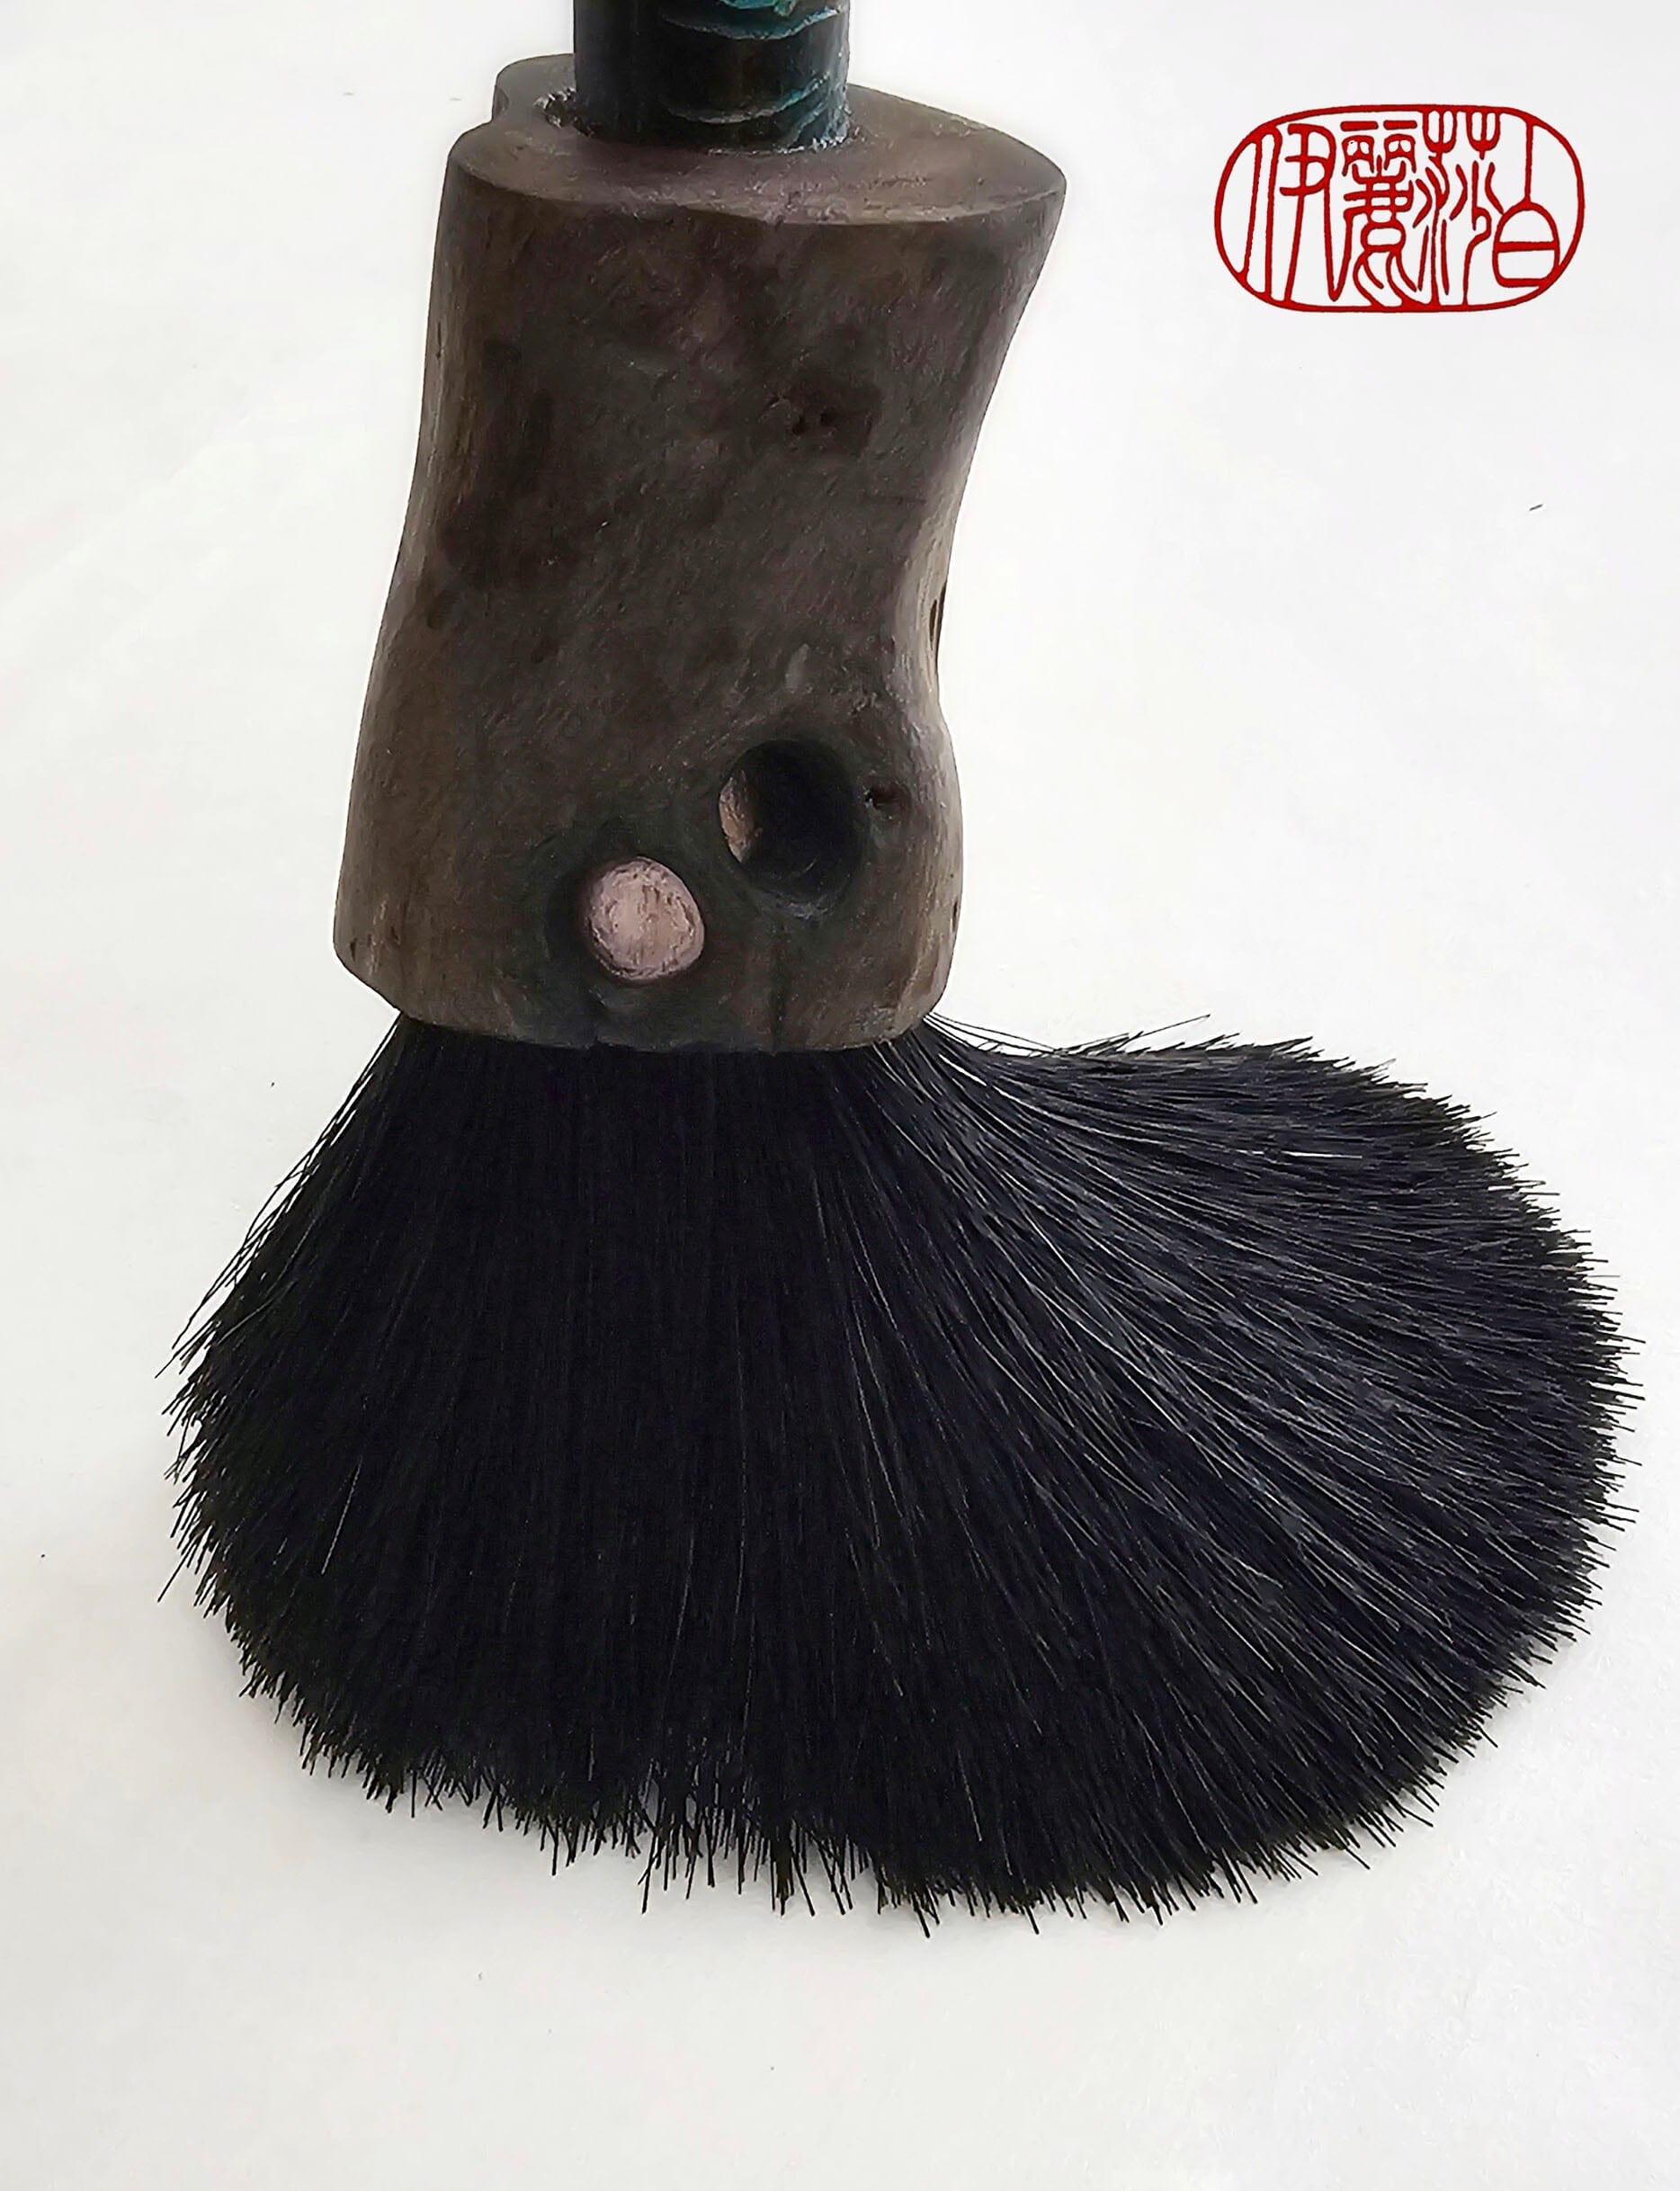 Premium Handcrafted Coarse Bristle Painter's Brush with Natural Wormwood Handle - Versatile for Acrylics, Oils, and Inks Art Supplies Elizabeth Schowachert Art